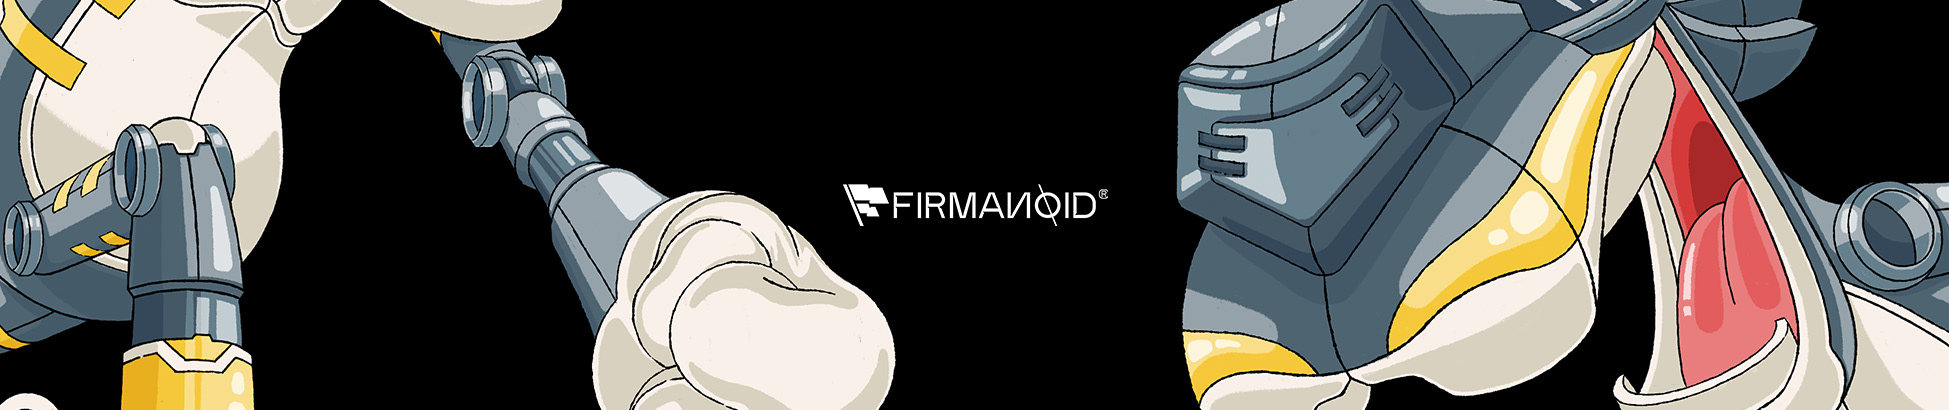 Firmanoid .'s profile banner